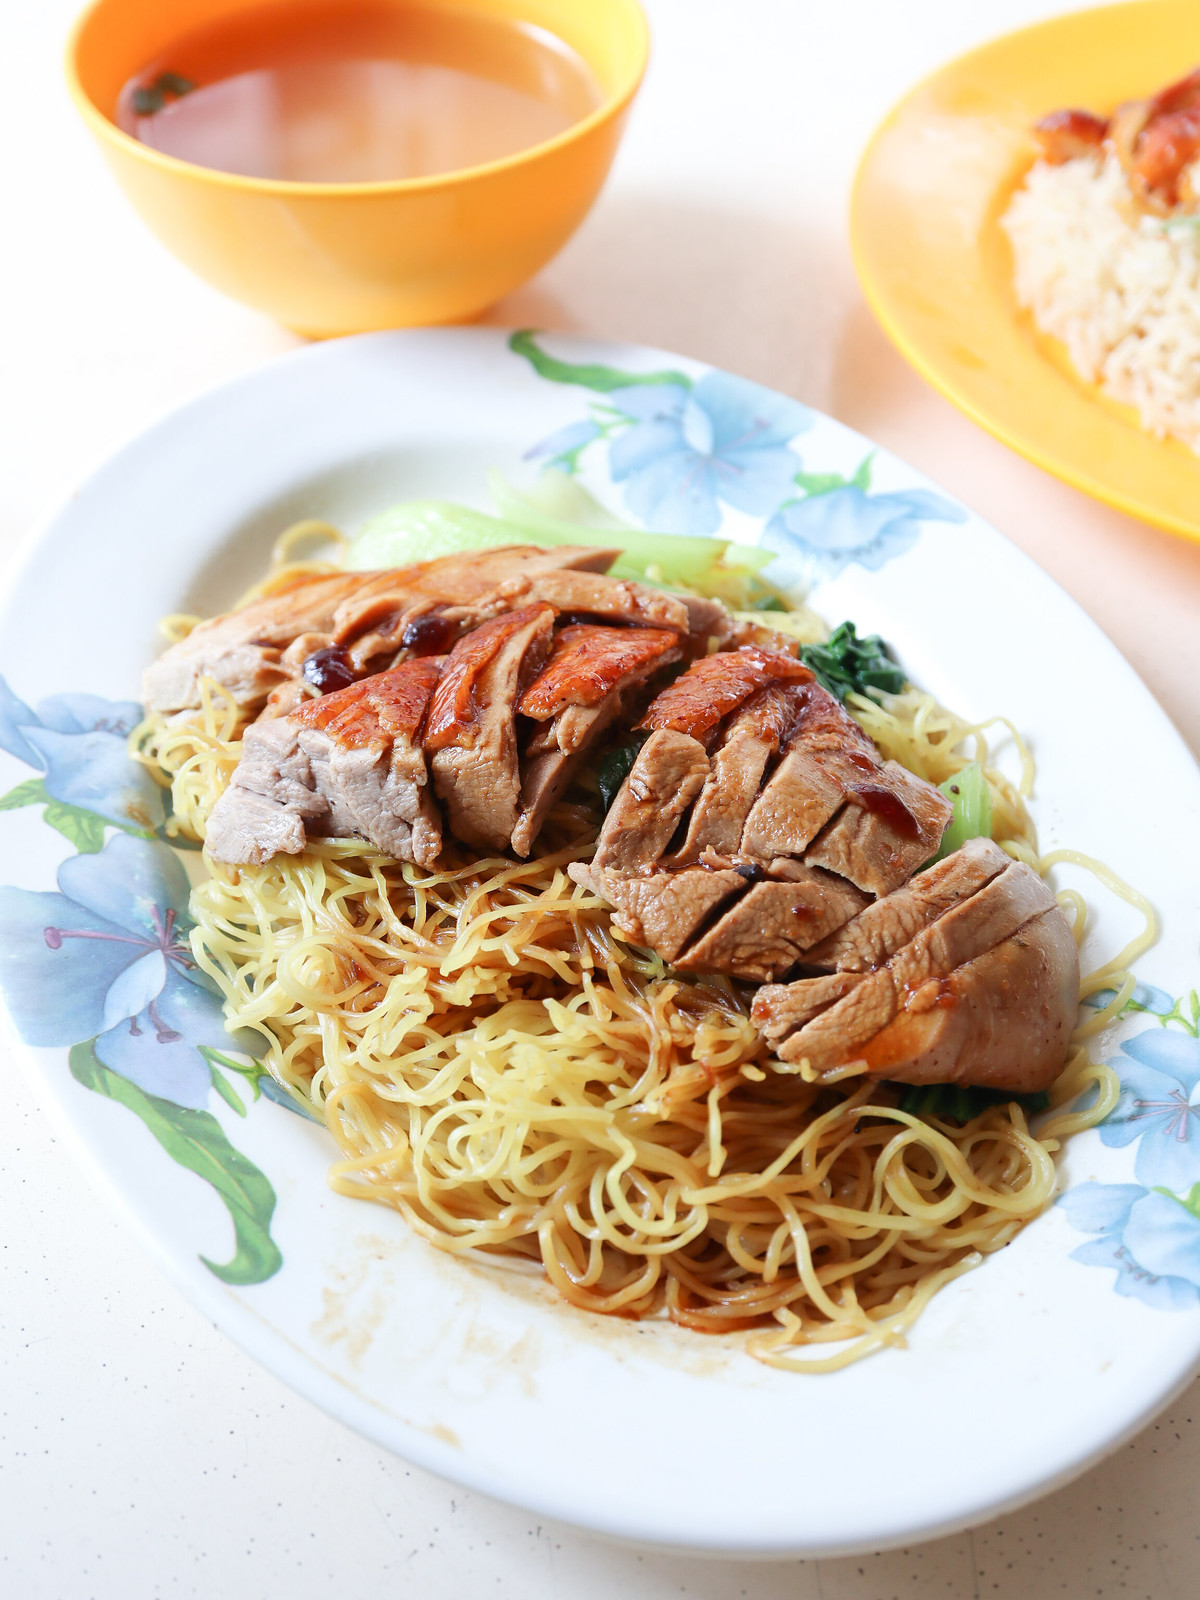 xiang ji roast chicken rice & noodles - roast duck noodle